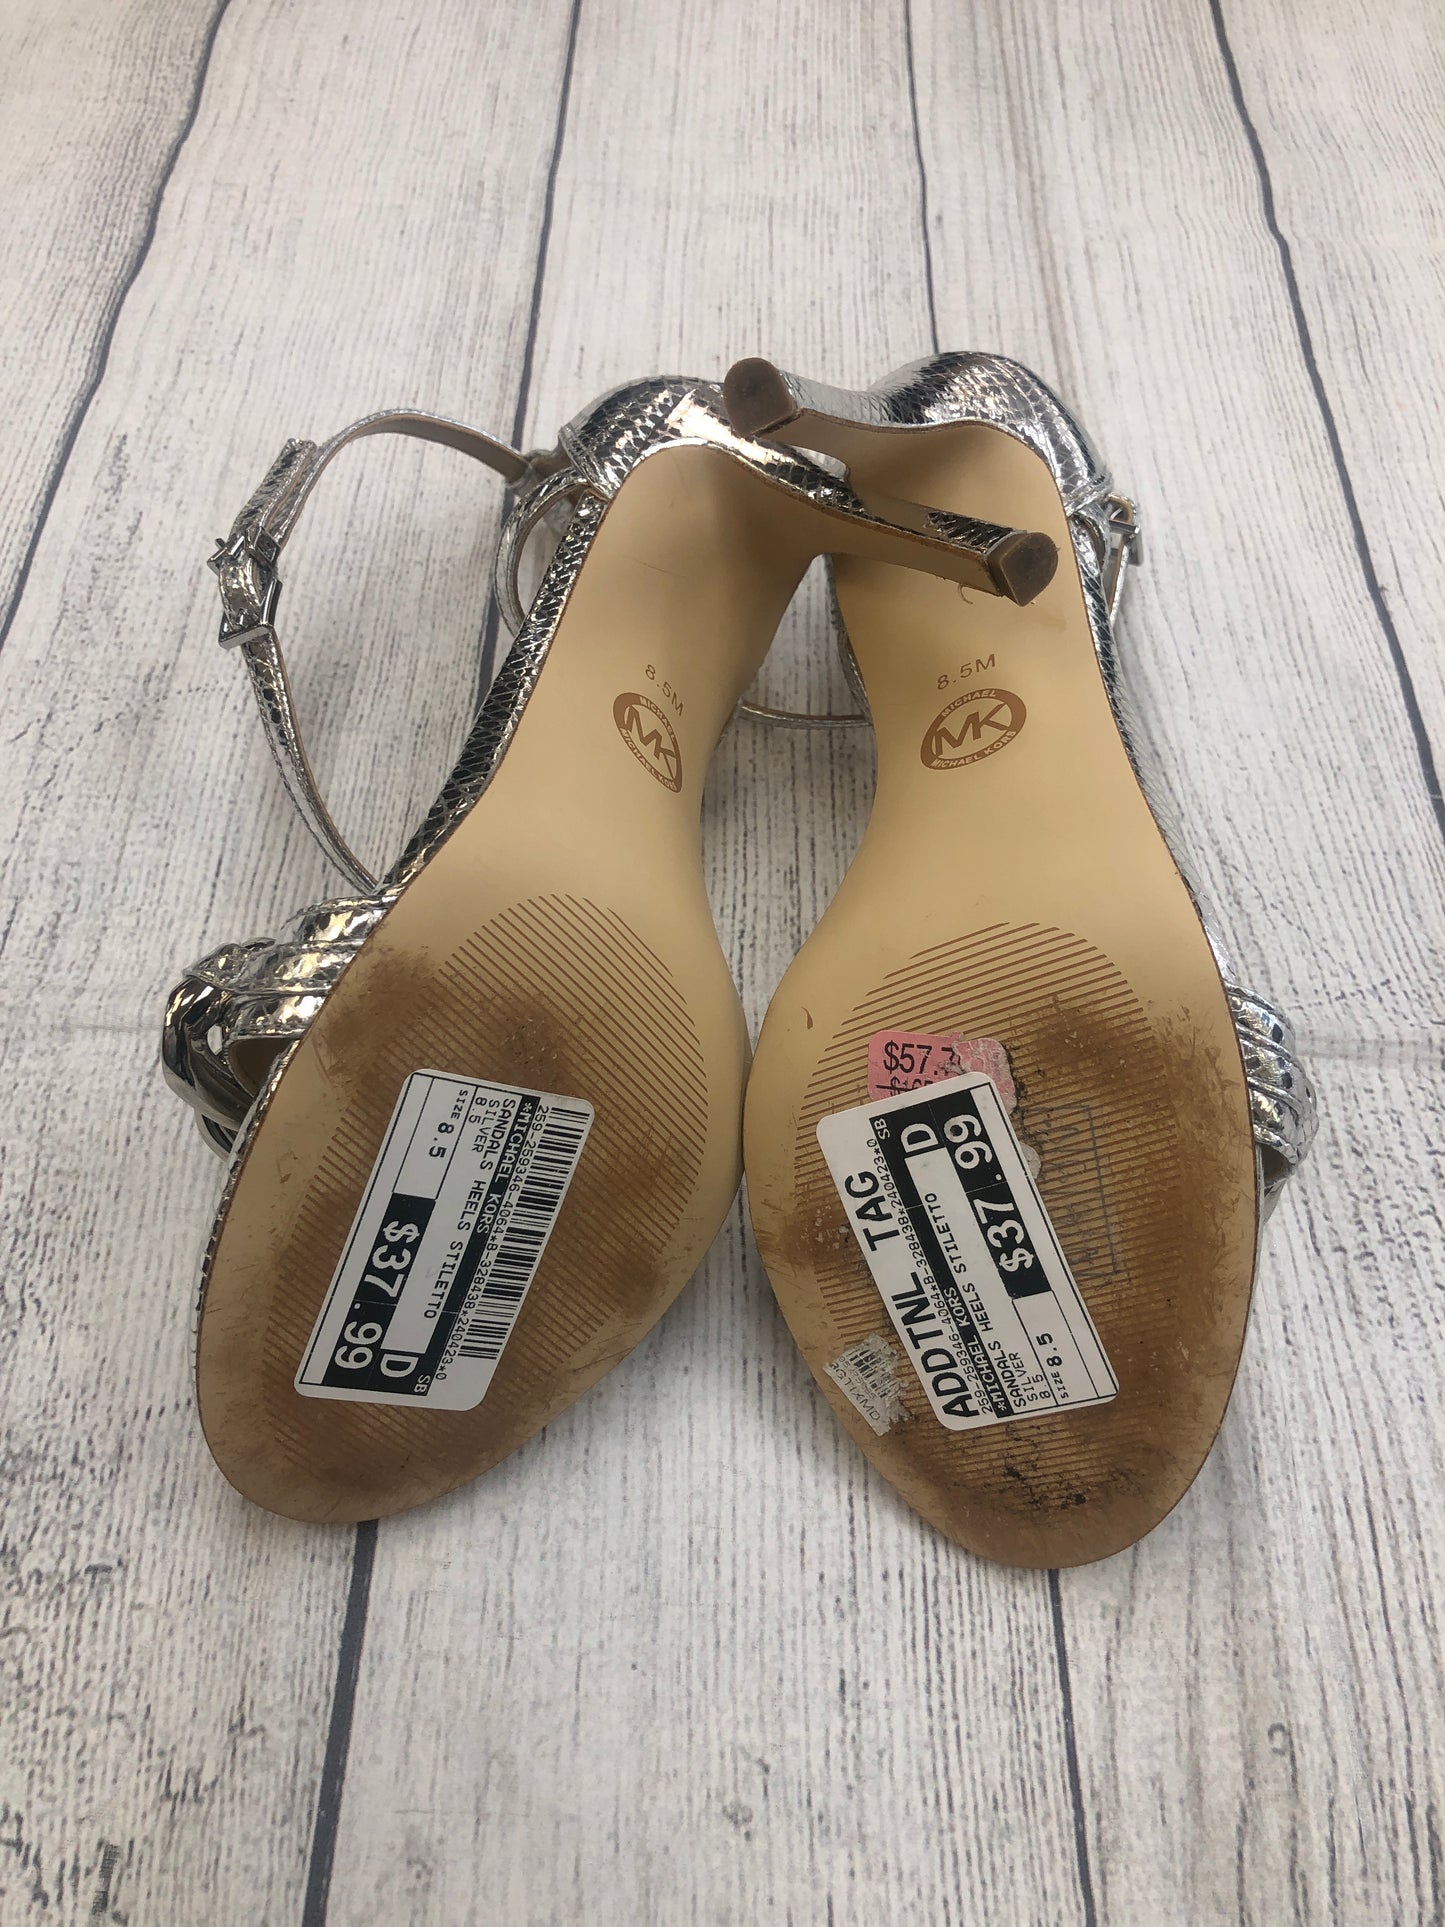 Sandals Heels Stiletto By Michael Kors  Size: 8.5